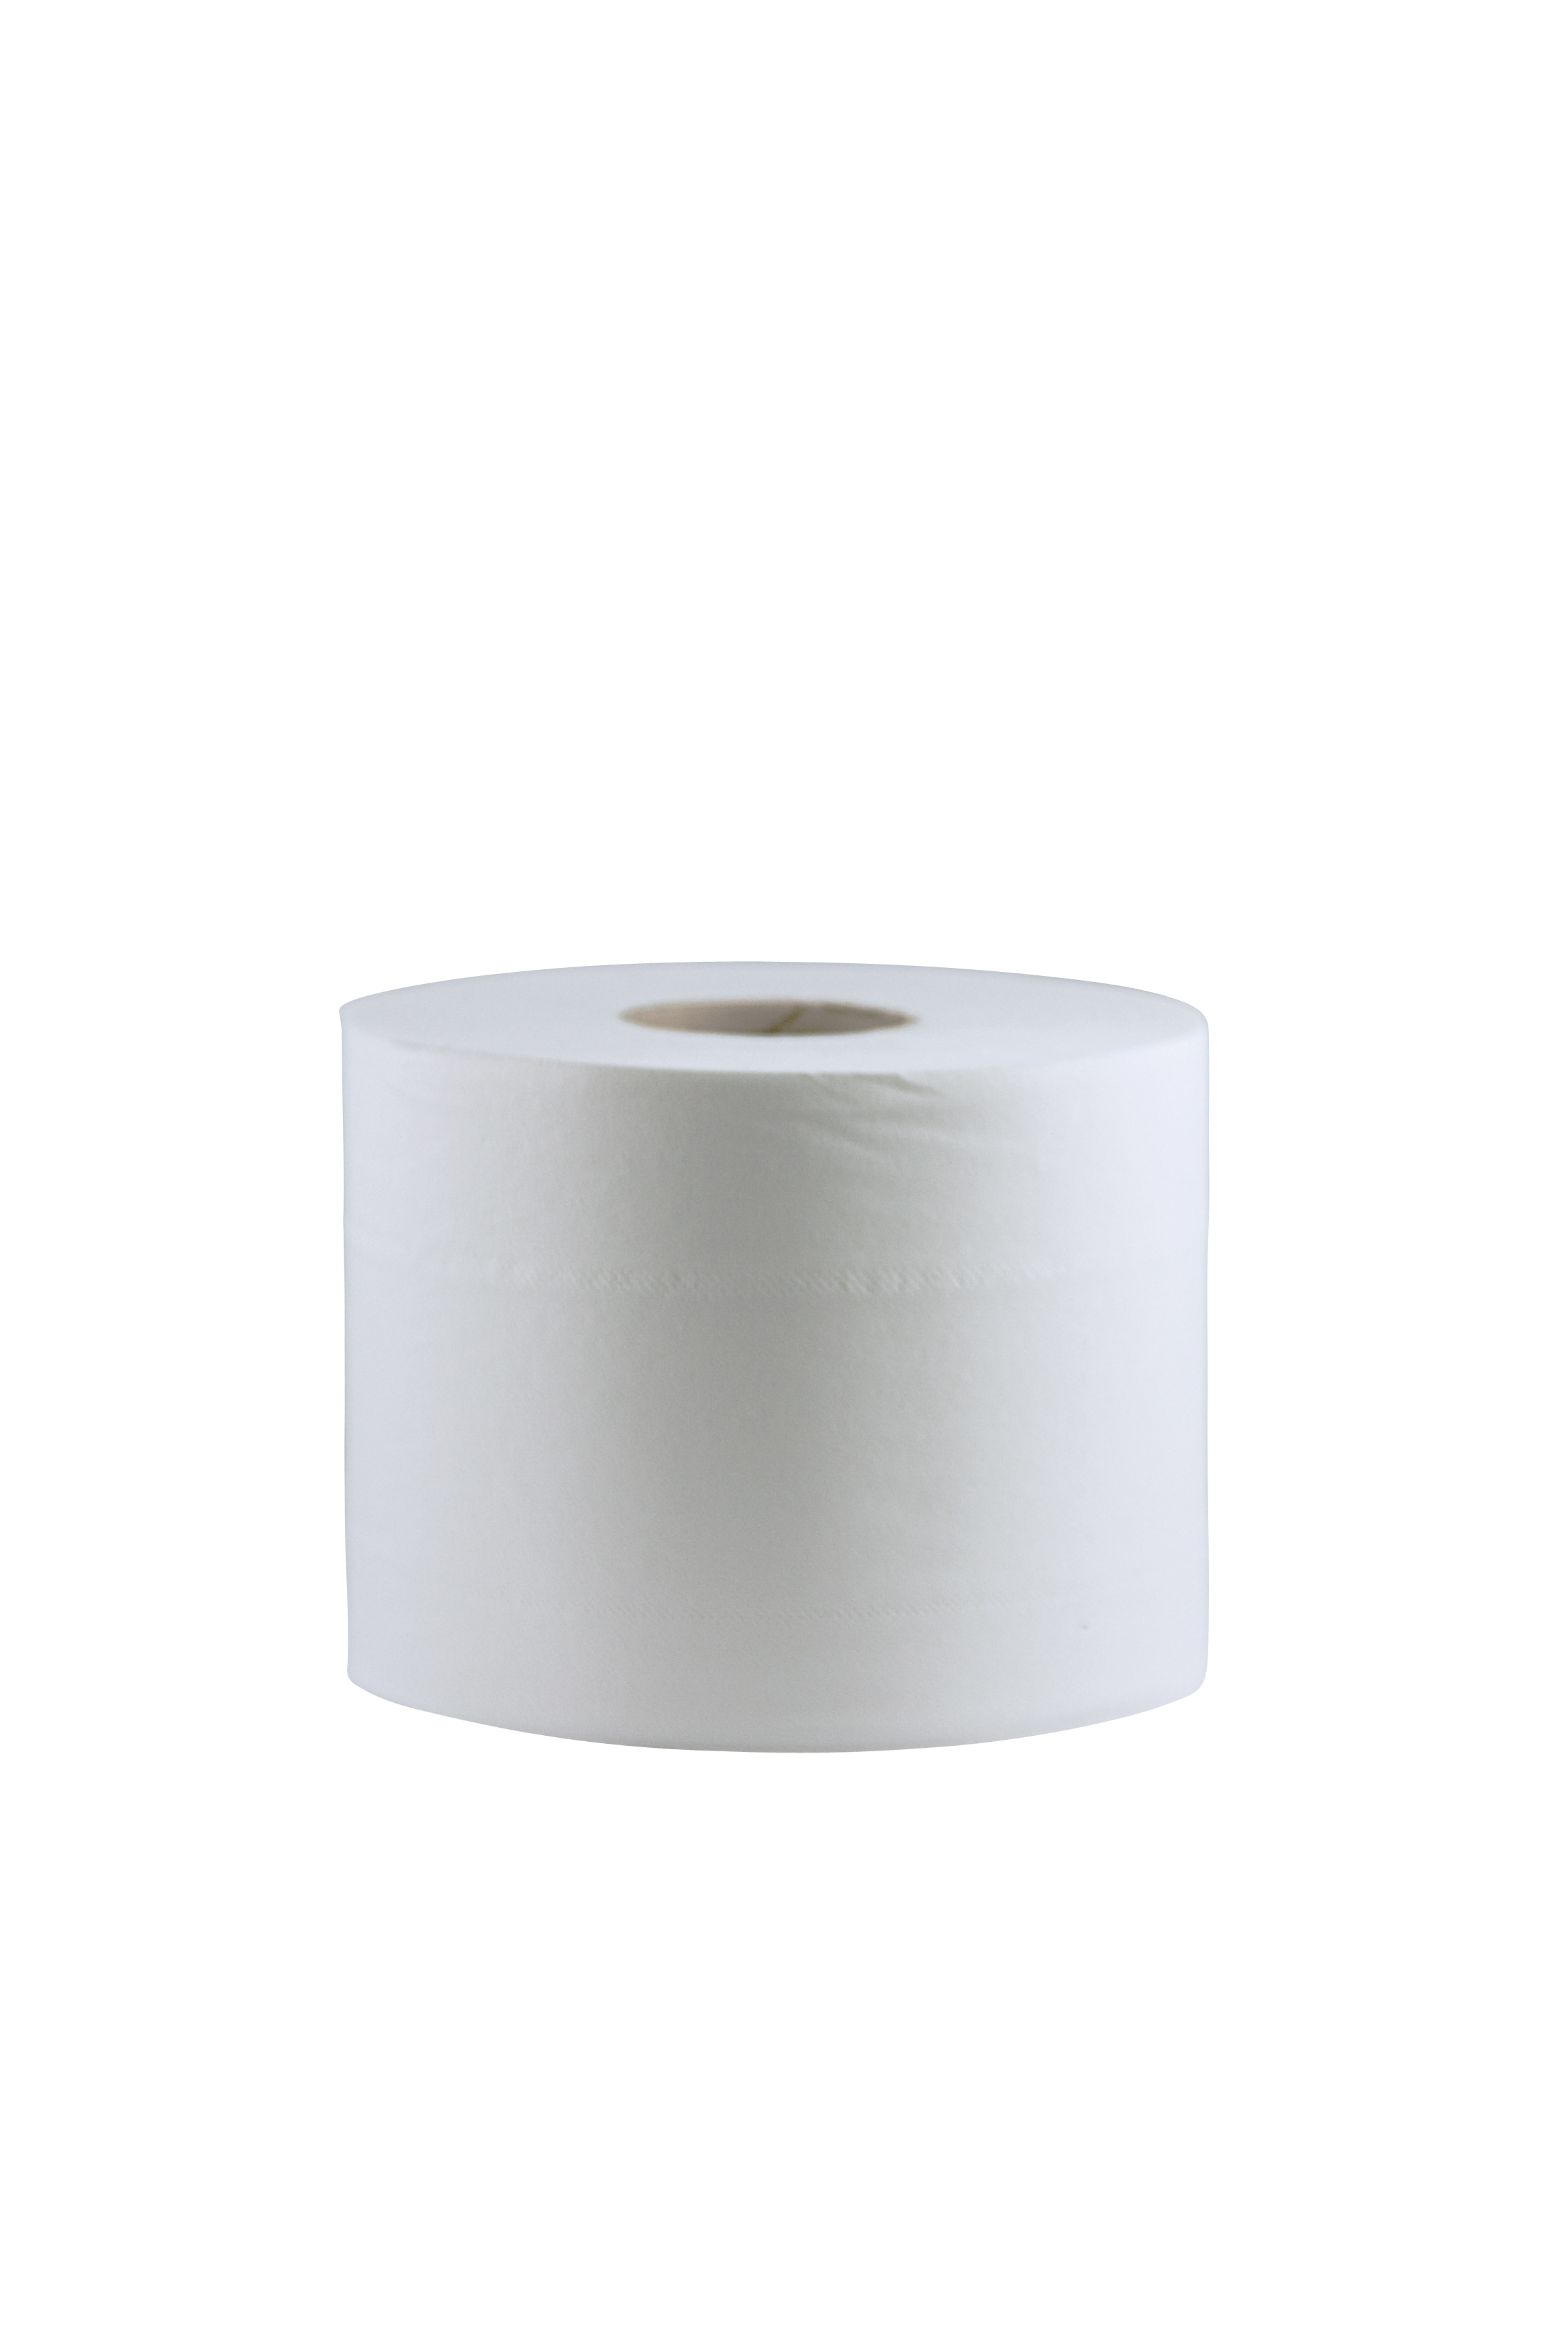 CWS Toilettenpapier  Maxi 100, 2-lagig 725 Blatt | VE= 24 Rollen 